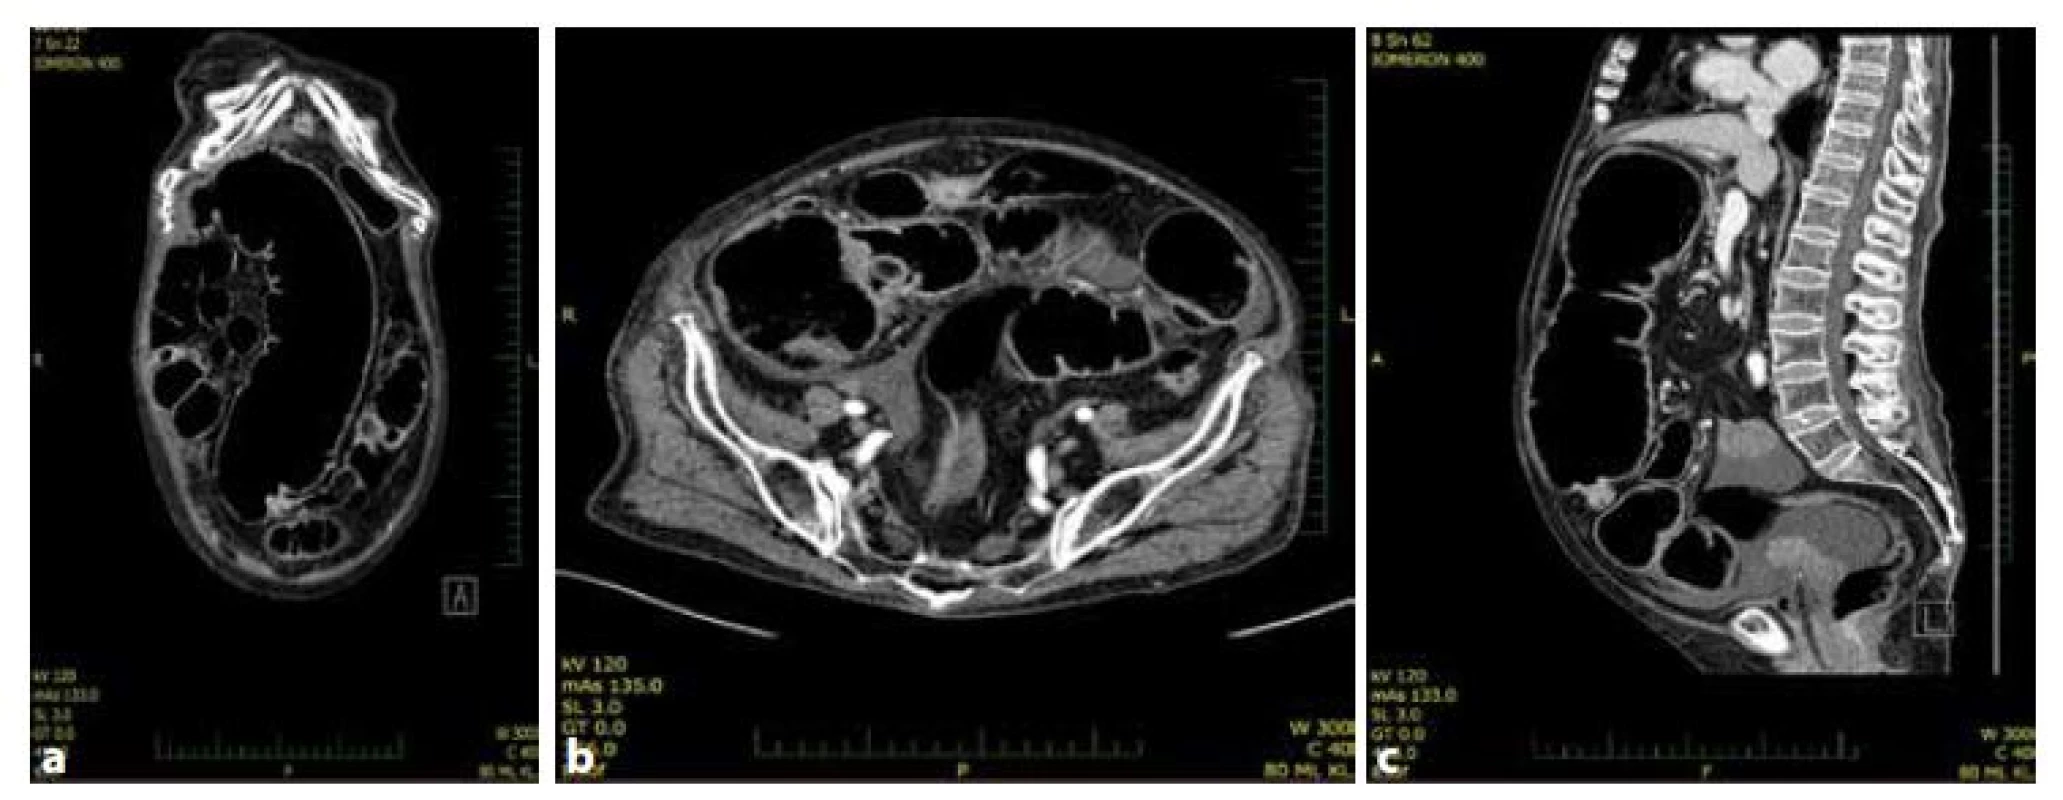 a,b,c: CT nález. Ileózní stav při nádoru c. transversum<br>
Fig. 1a,b,c: CT finding. Large bowel obstruction caused by tumor of transverse colon